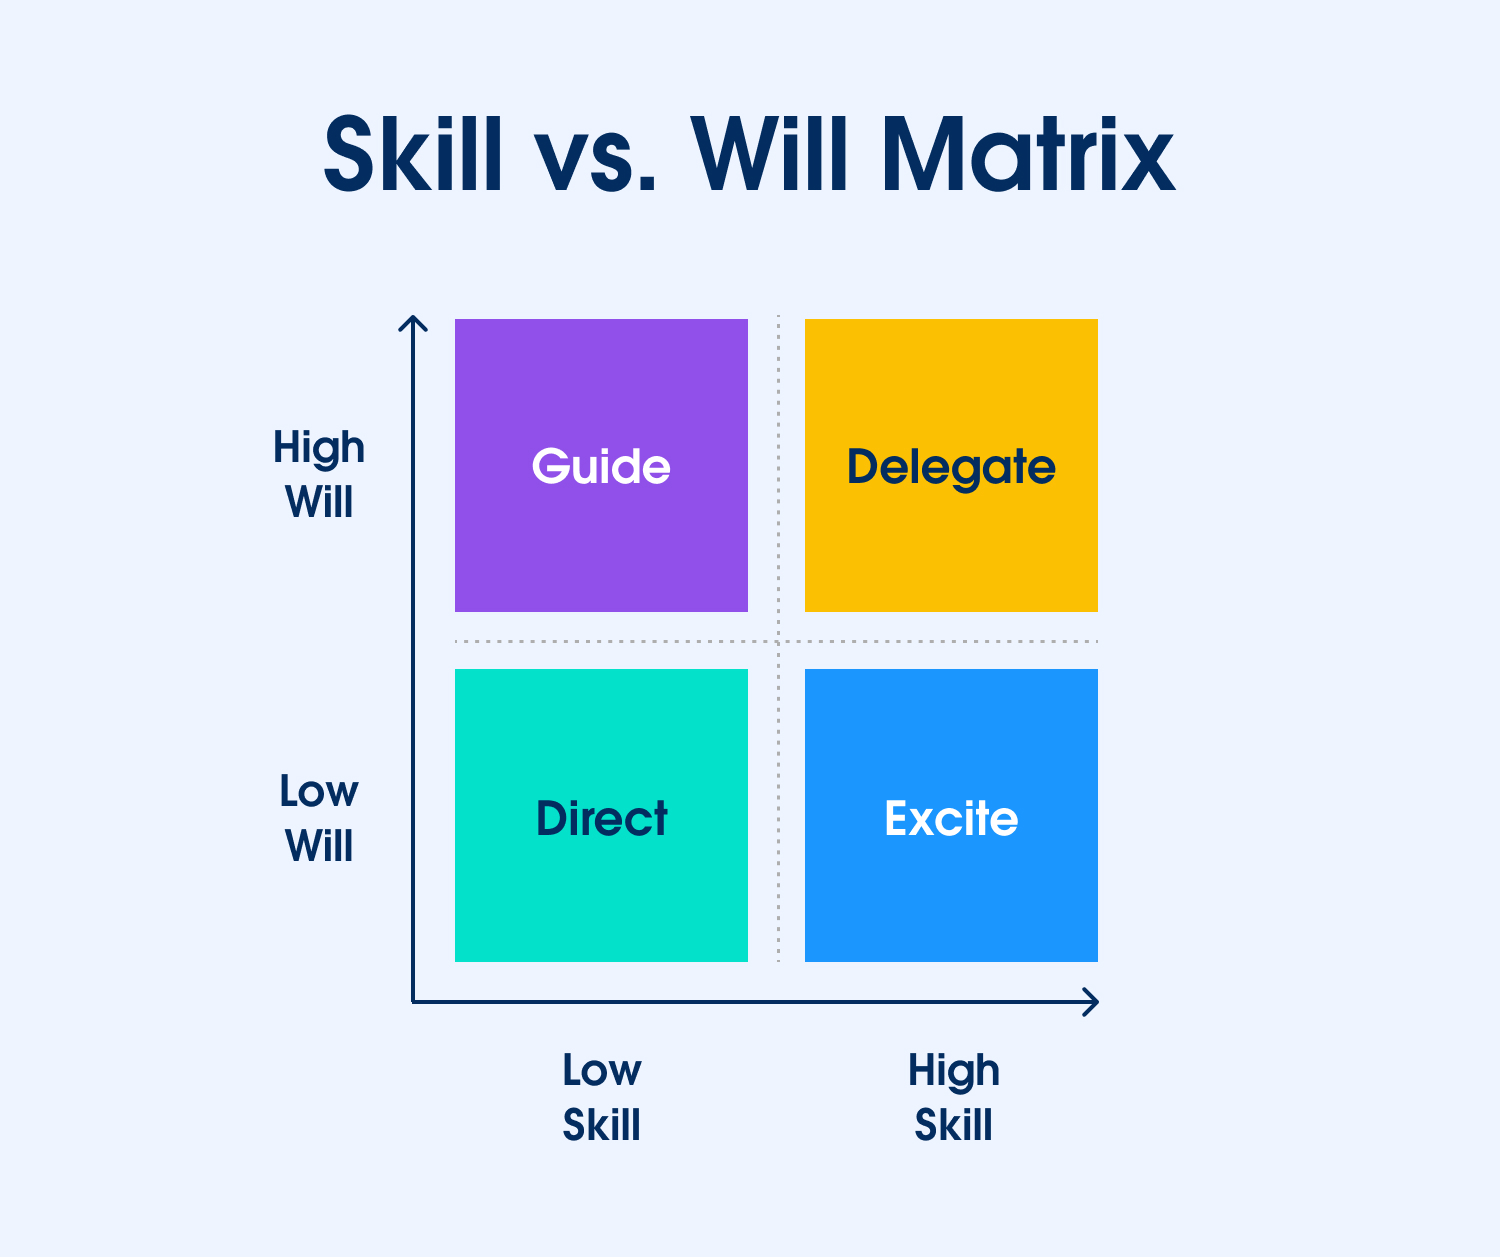 The skills vs. will matrix